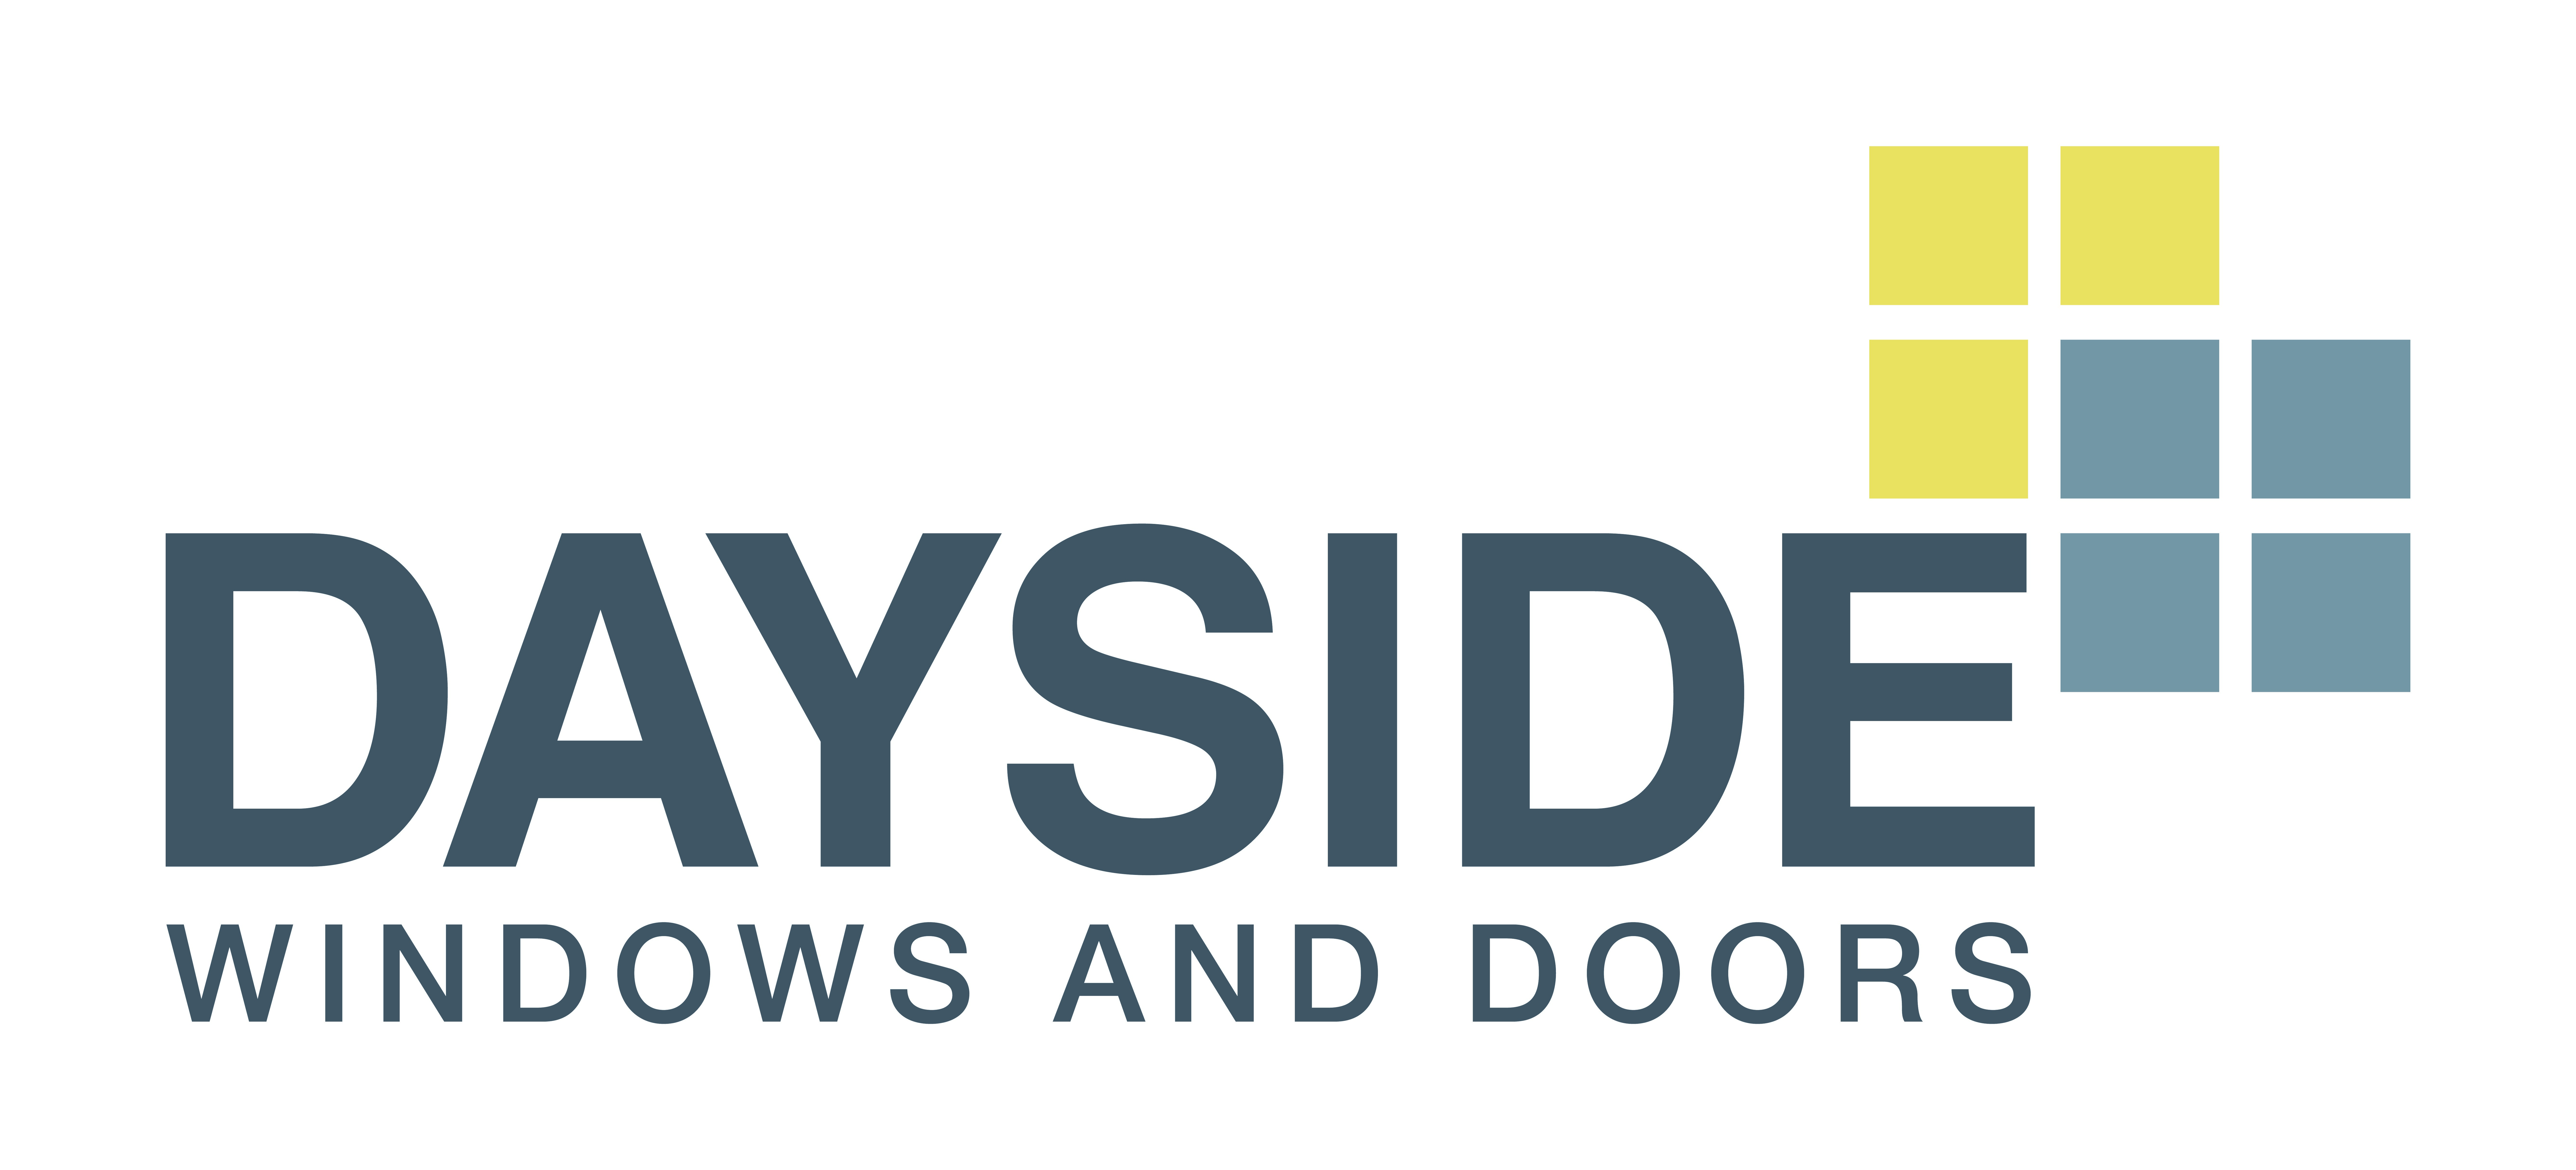 Dayside Windows and Doors logo